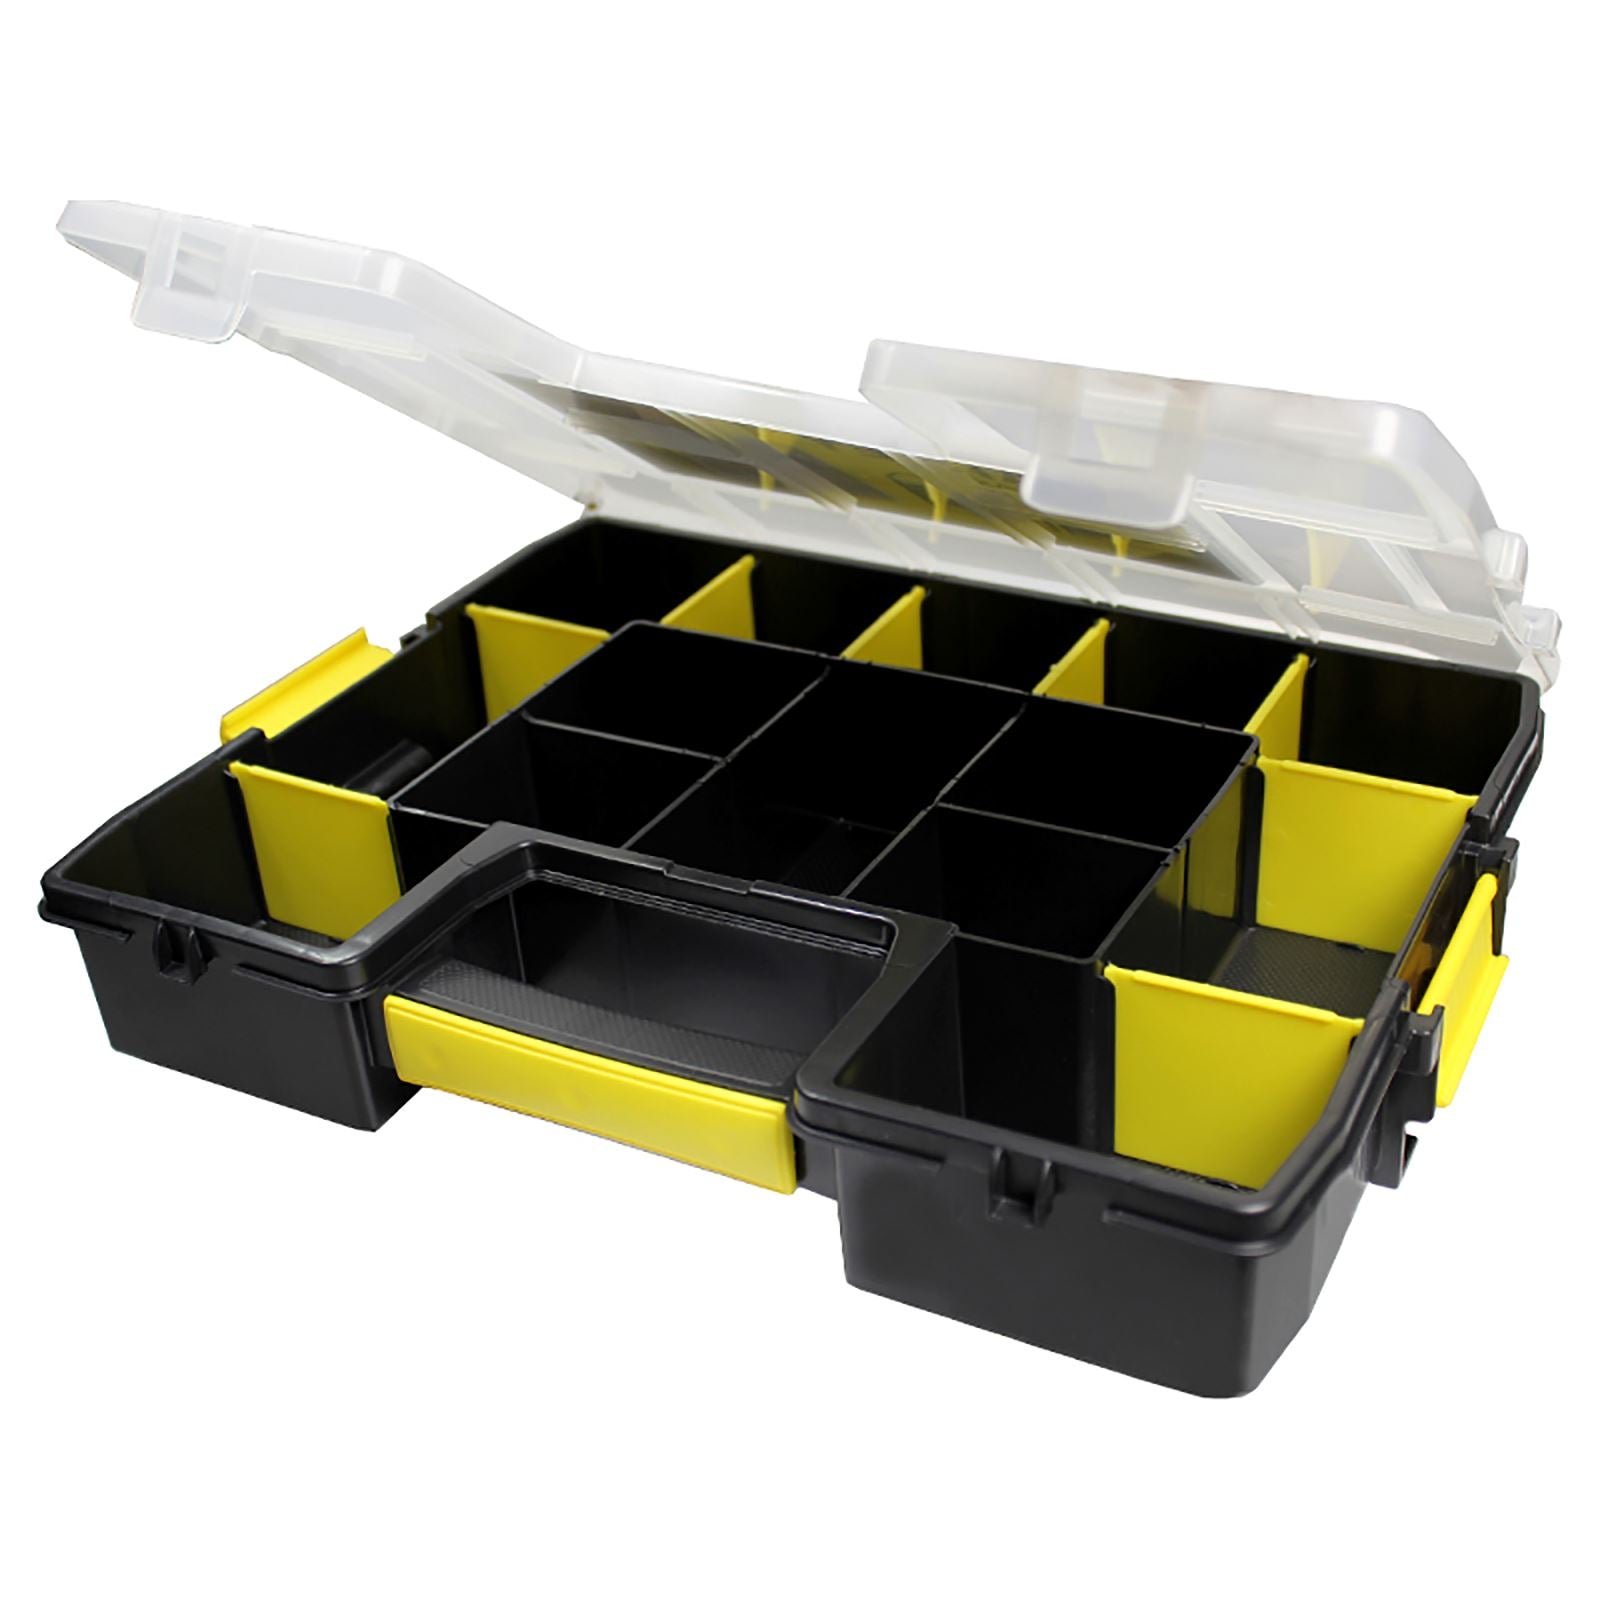 Stanley Stackable Sort Master Junior Organiser Tool Box Storage Carry Case